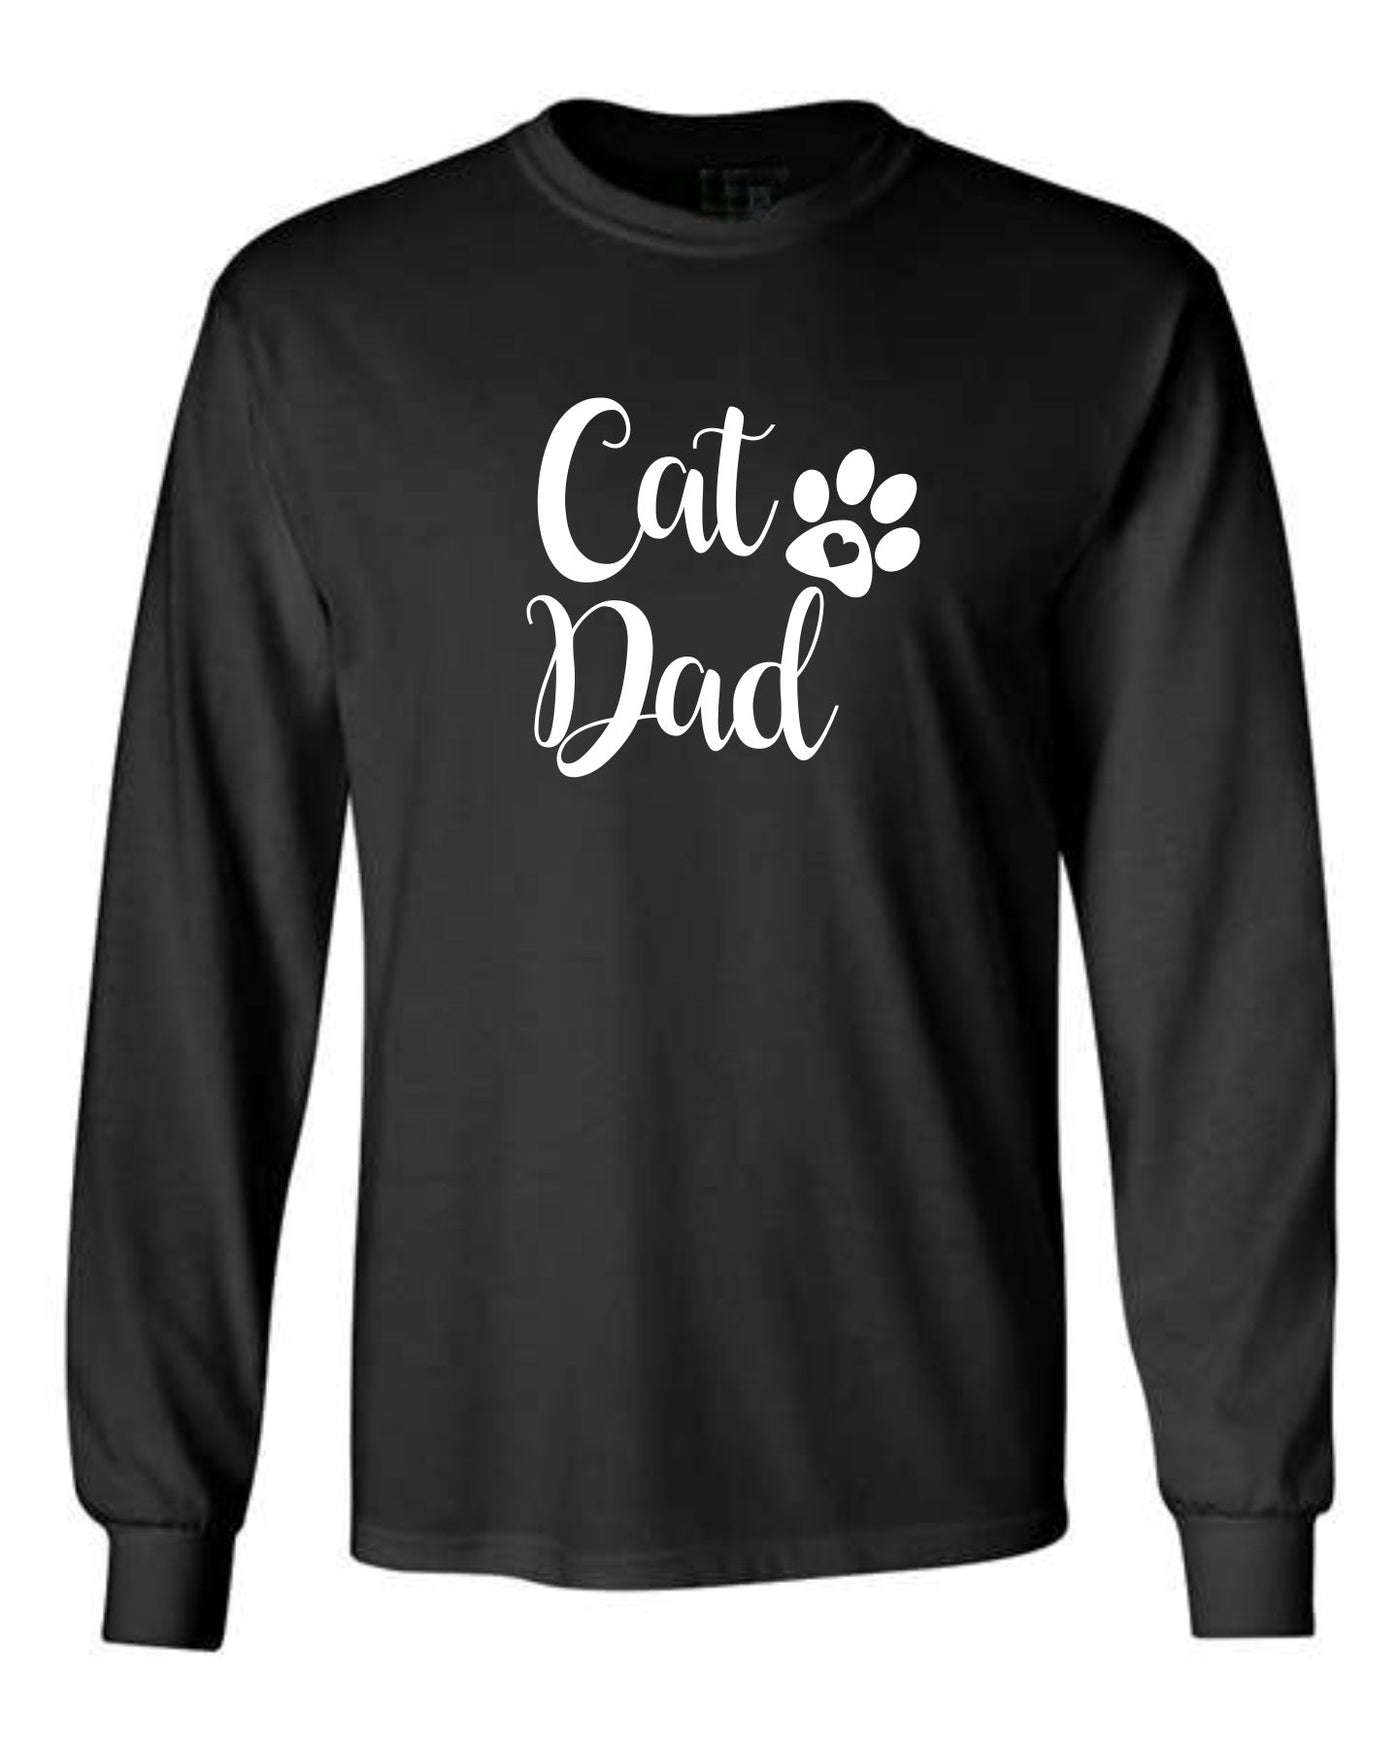 "Cat Dad" Unisex Long Sleeve Shirt